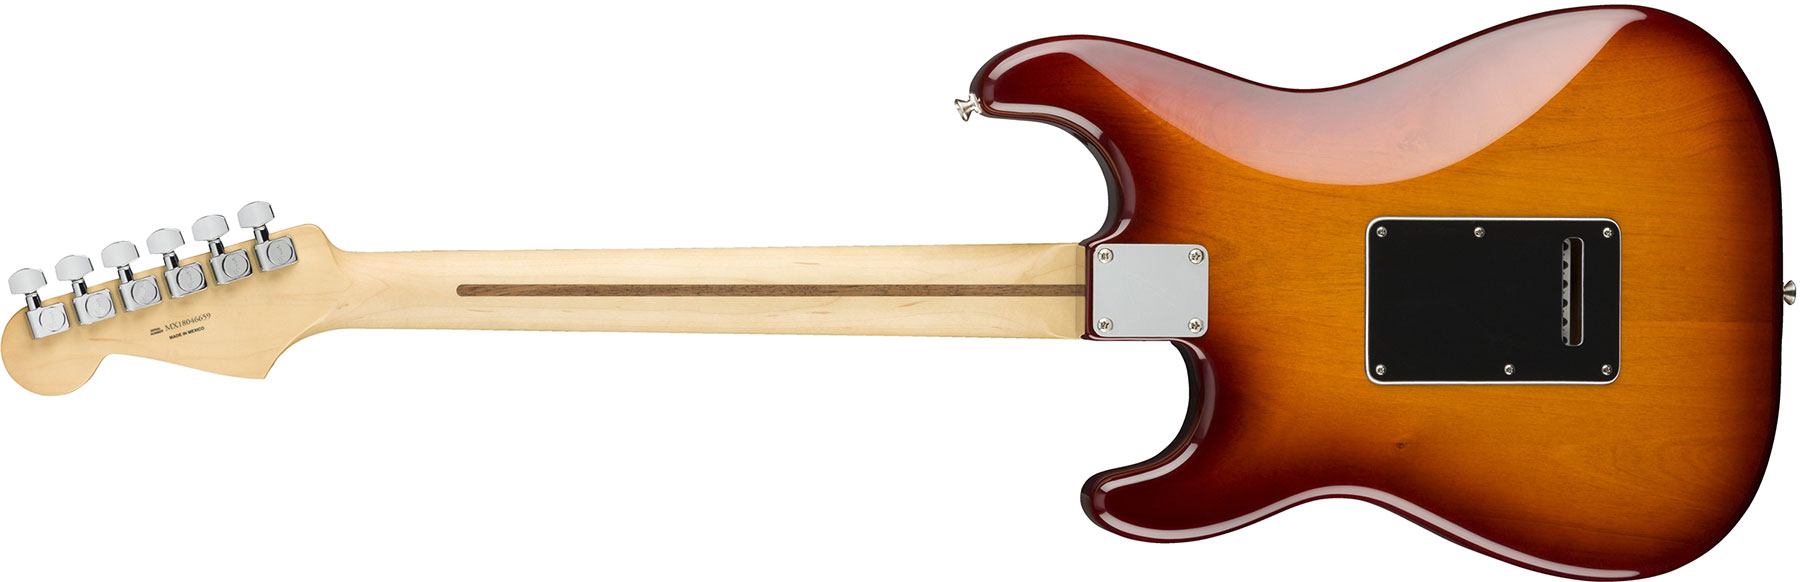 Fender Strat Player Mex Hsh Pf - Tobacco Burst - Guitare Électrique Forme Str - Variation 1